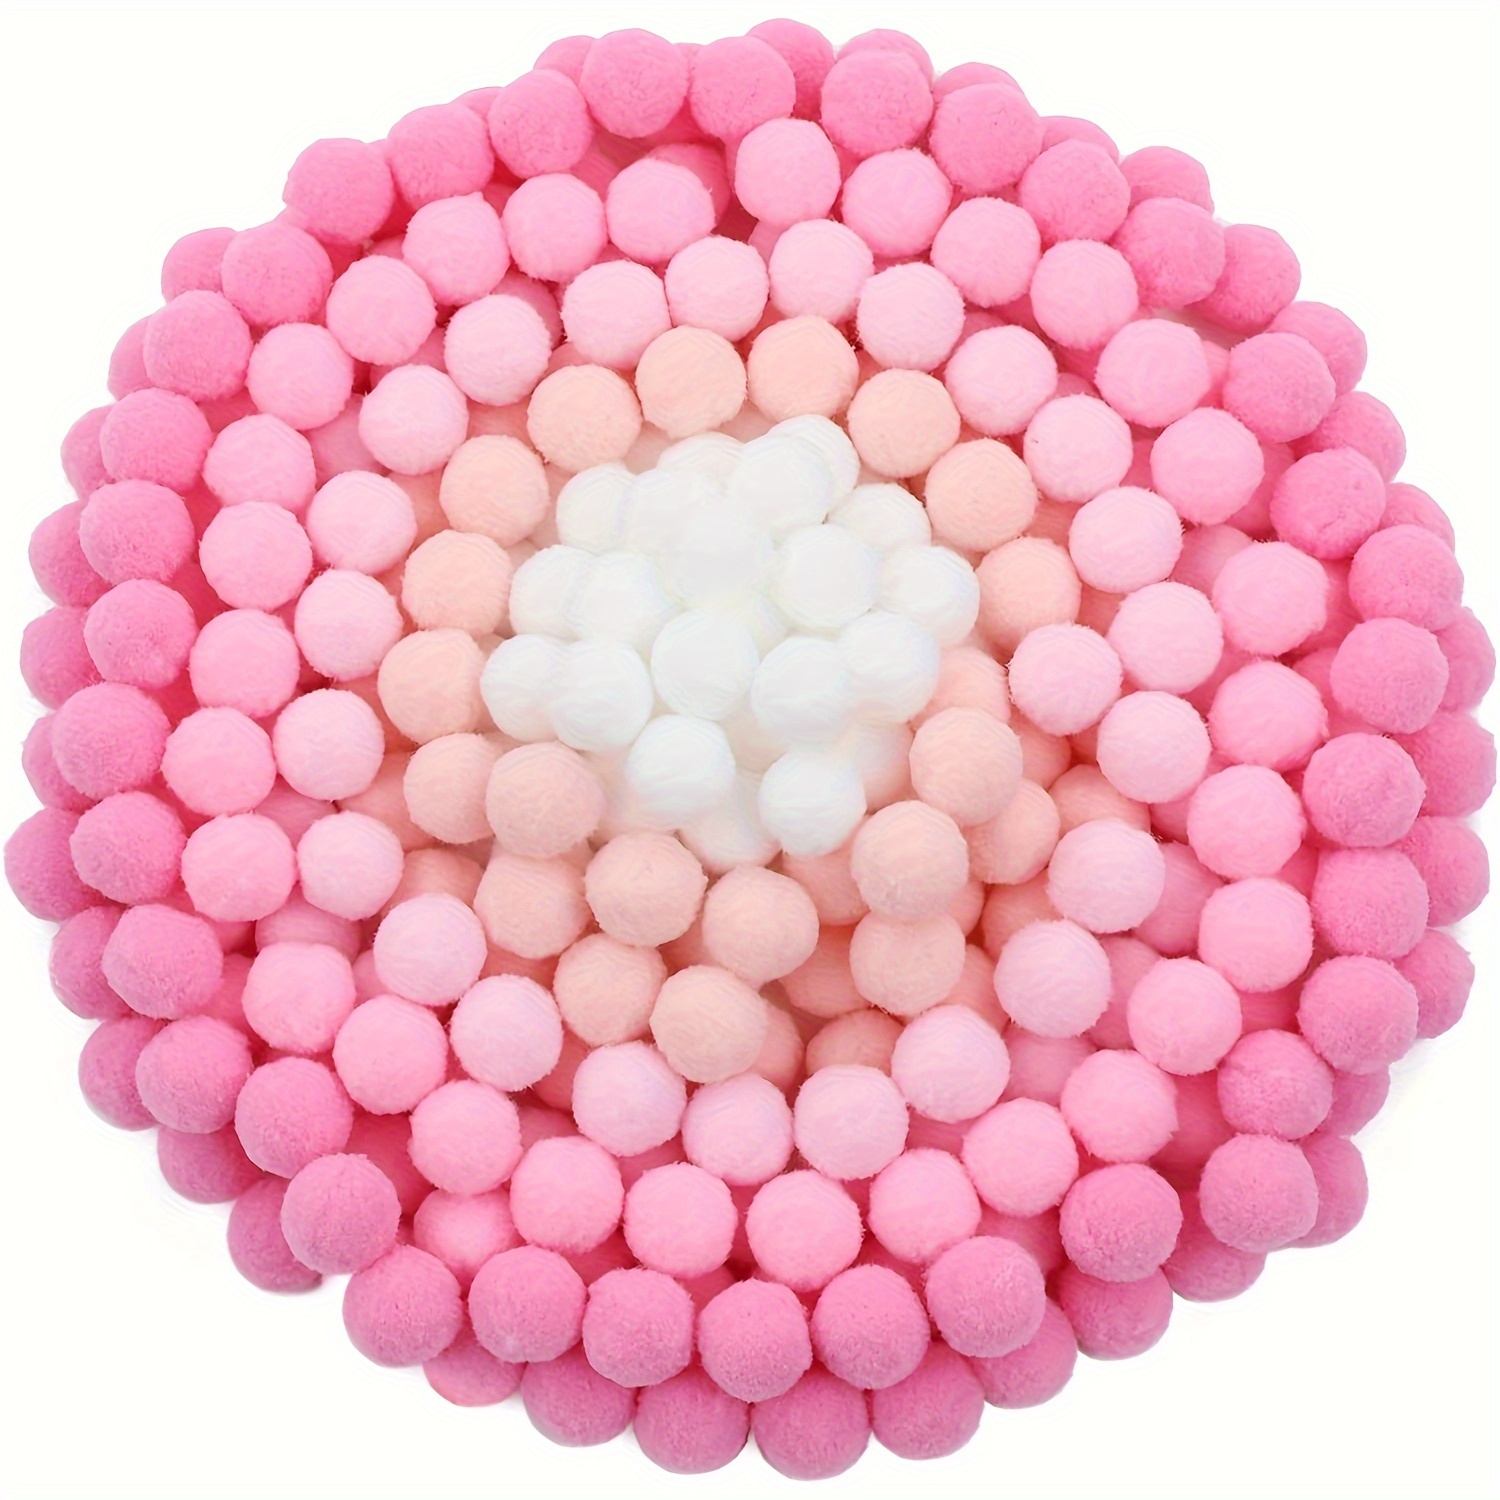 500 Pieces Christmas Pom Poms 12 Mm Glitter Pompoms Sparkly Fuzzy Poms  Balls for